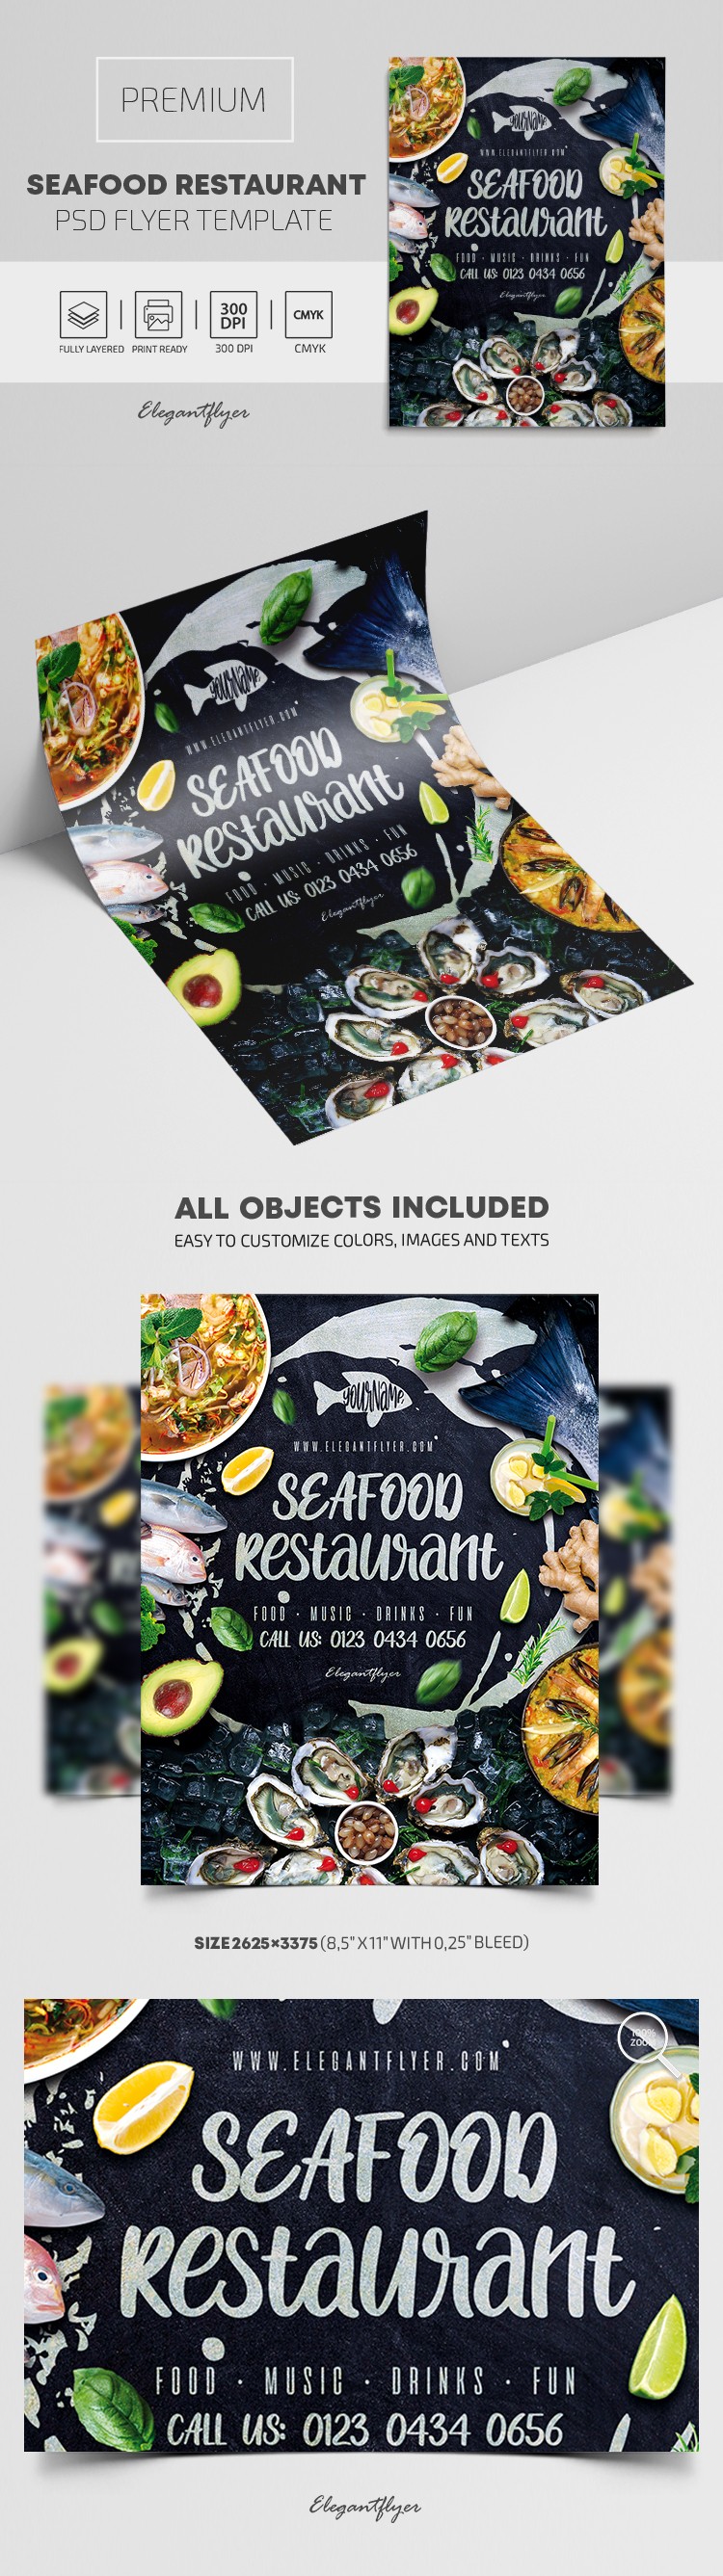 Seafood Restaurant Flyer by ElegantFlyer